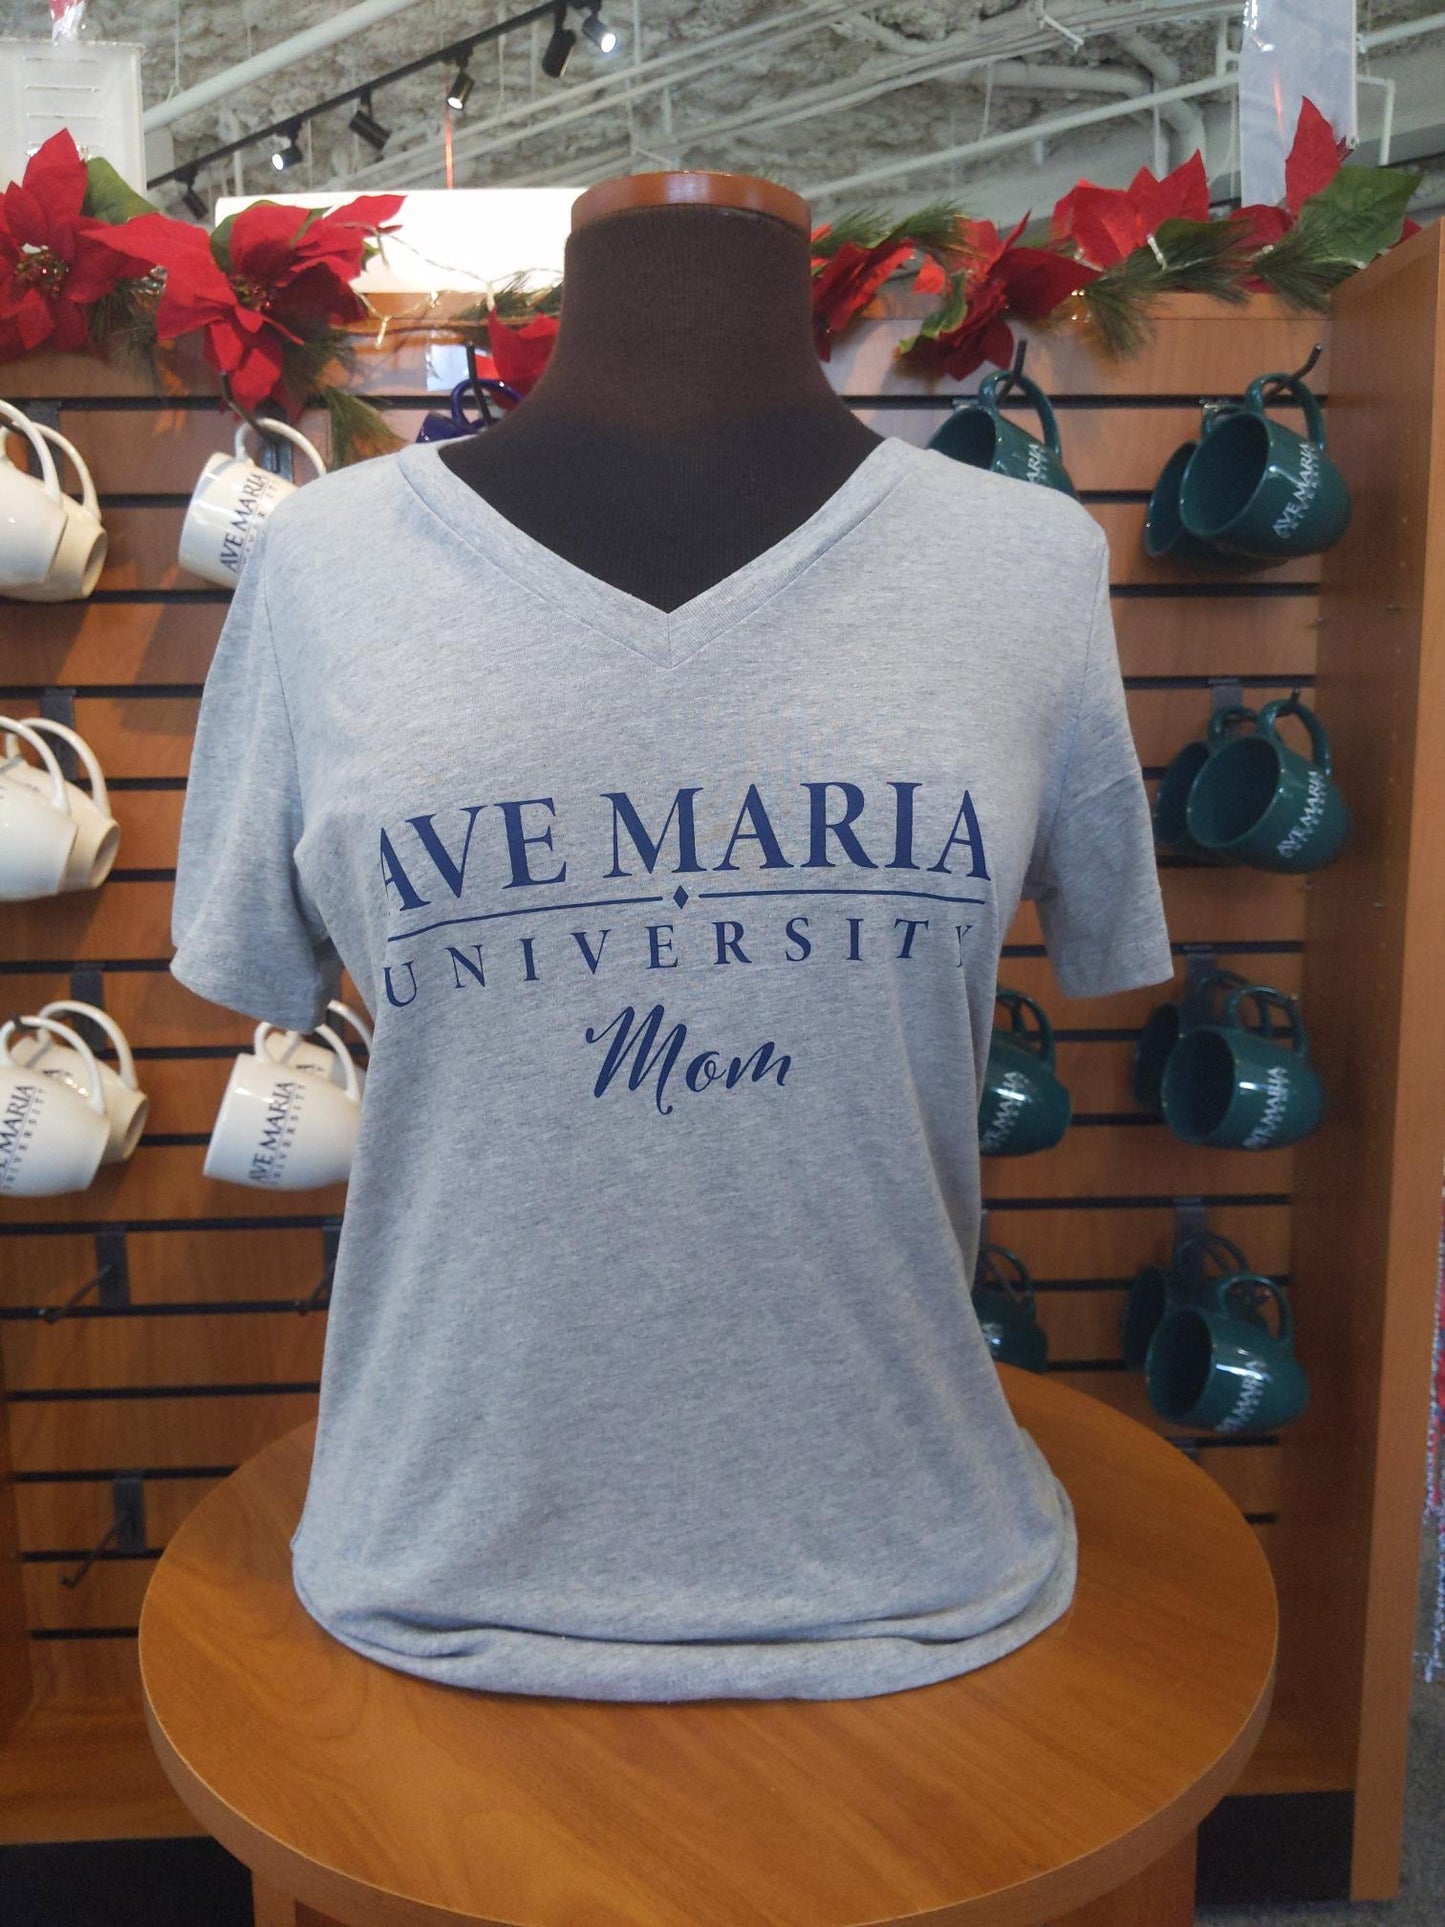 Ave Maria University Mom Short Sleeve V-Neck